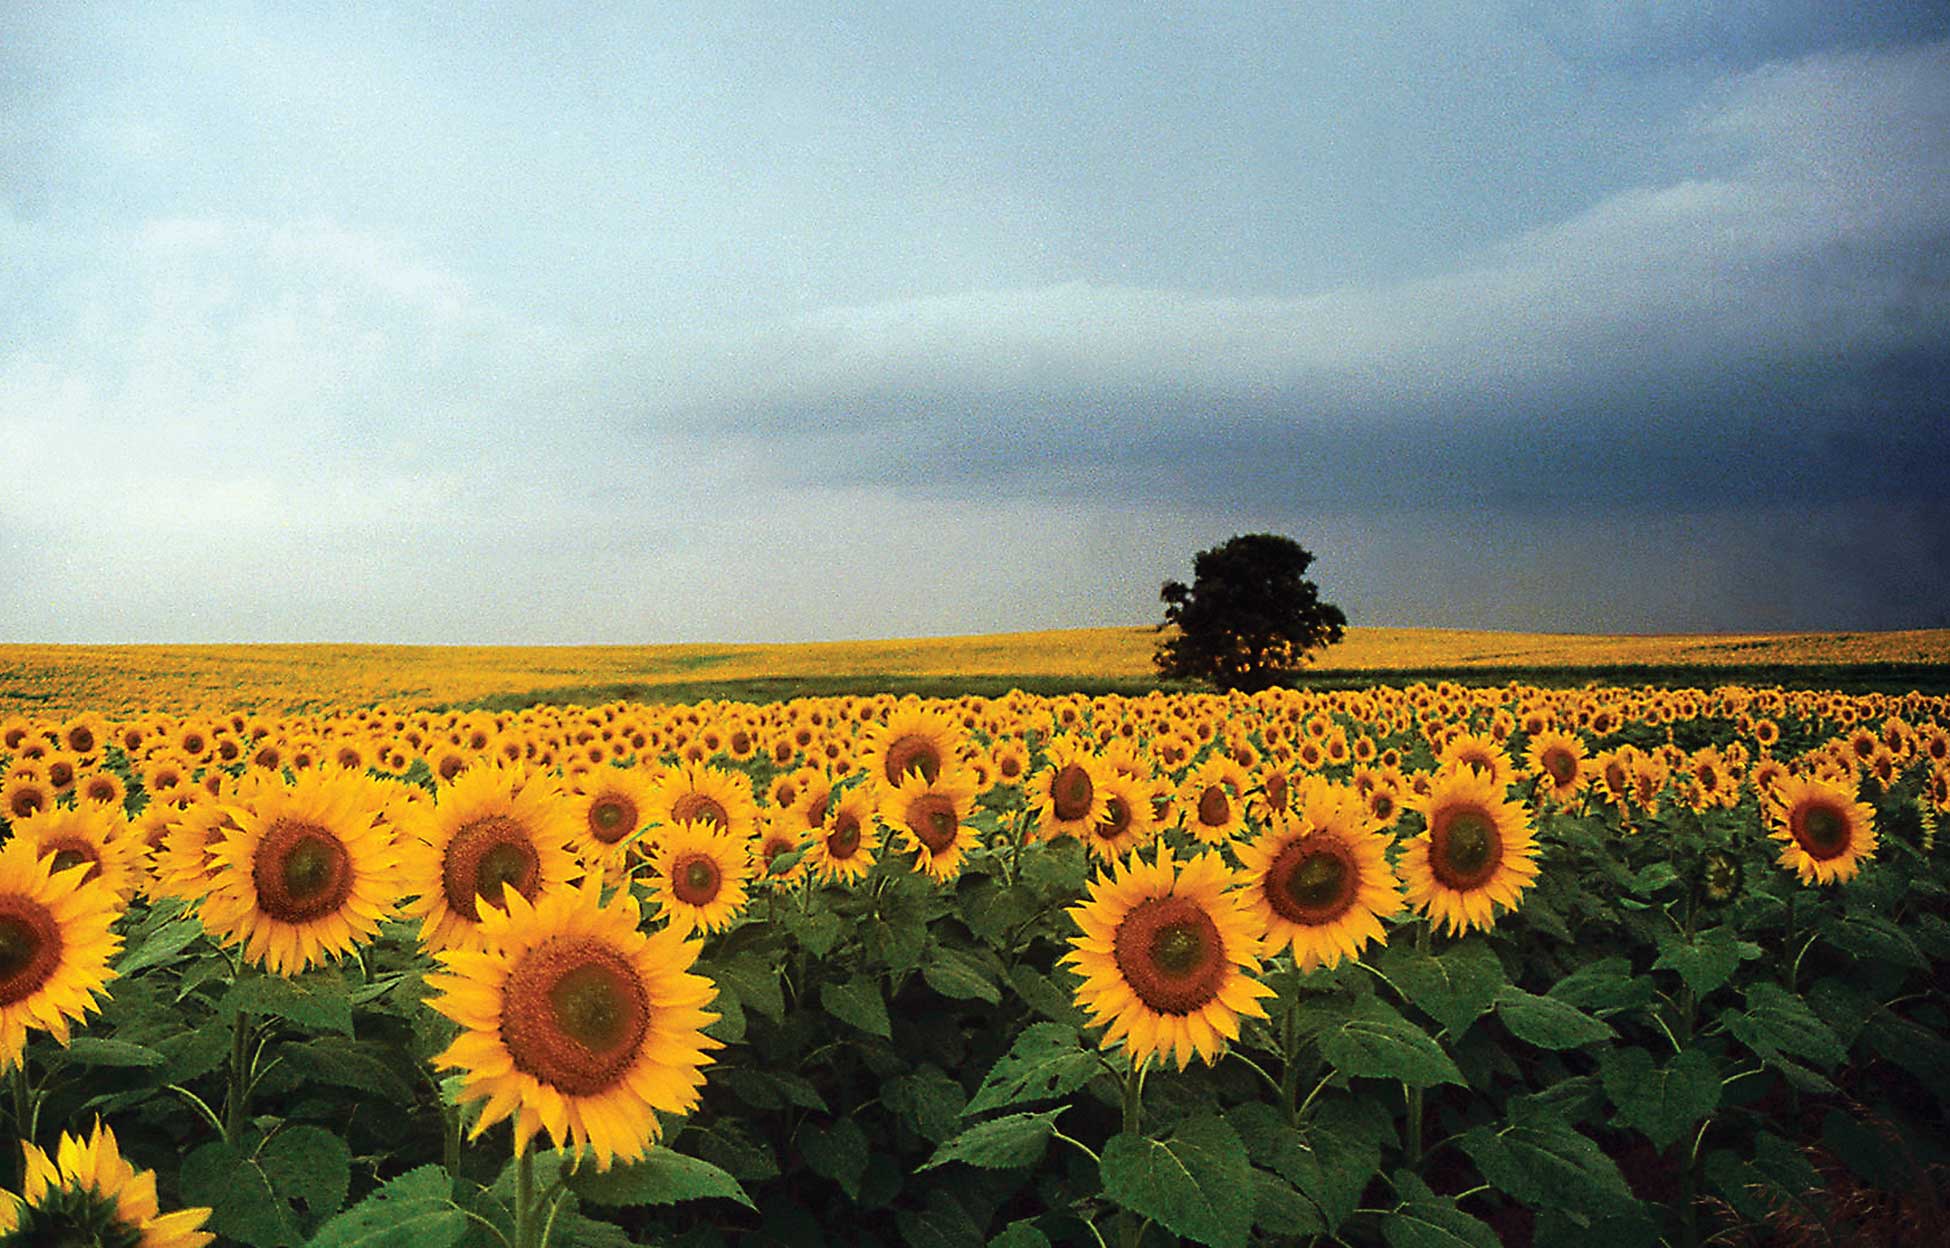 Figure 86. Sunflowers